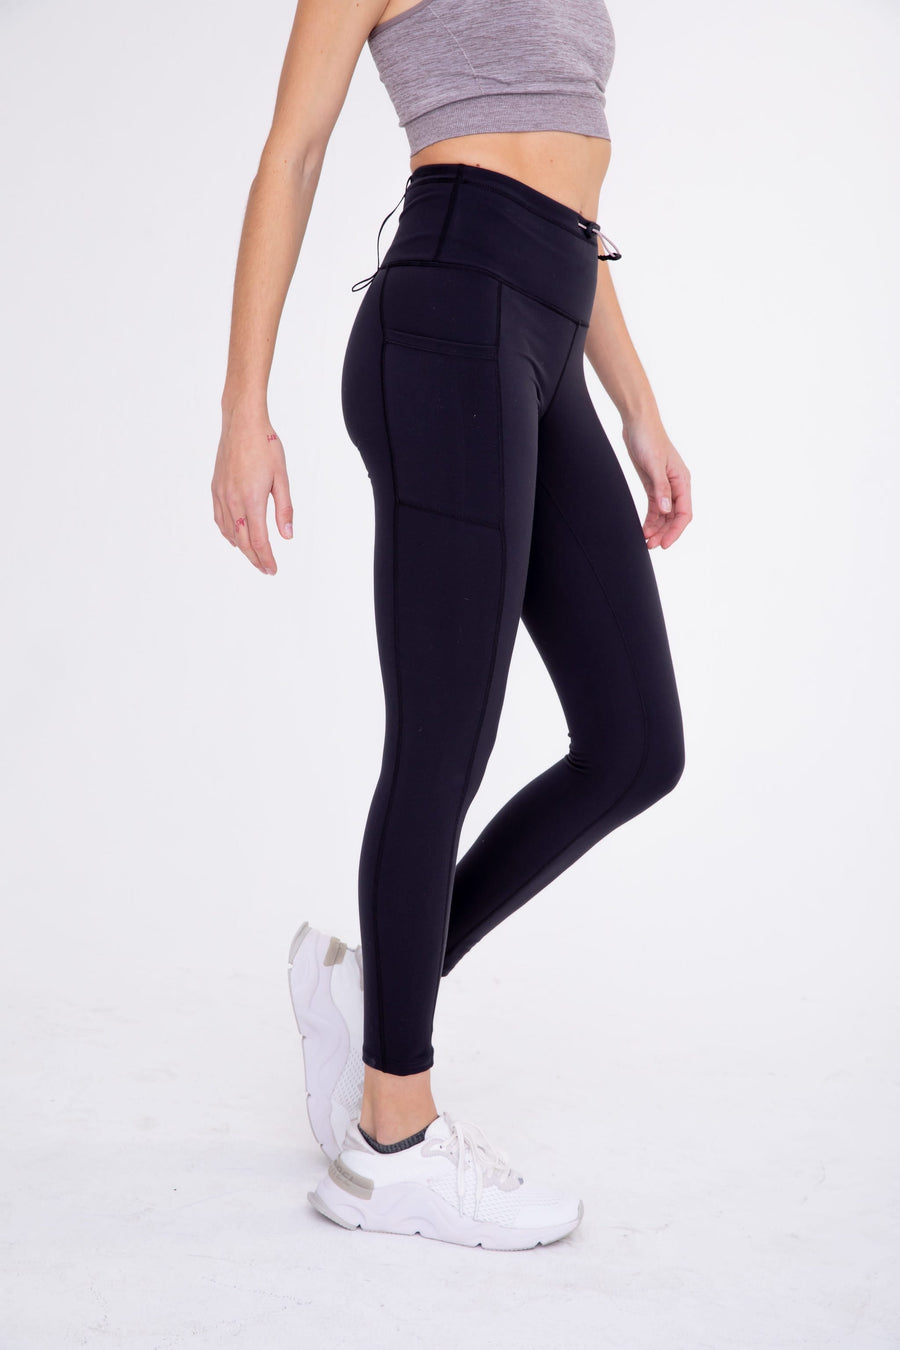 Mono B Leggings Women’s Size Medium Black Zip Pocket Lace Up Bottom Solid